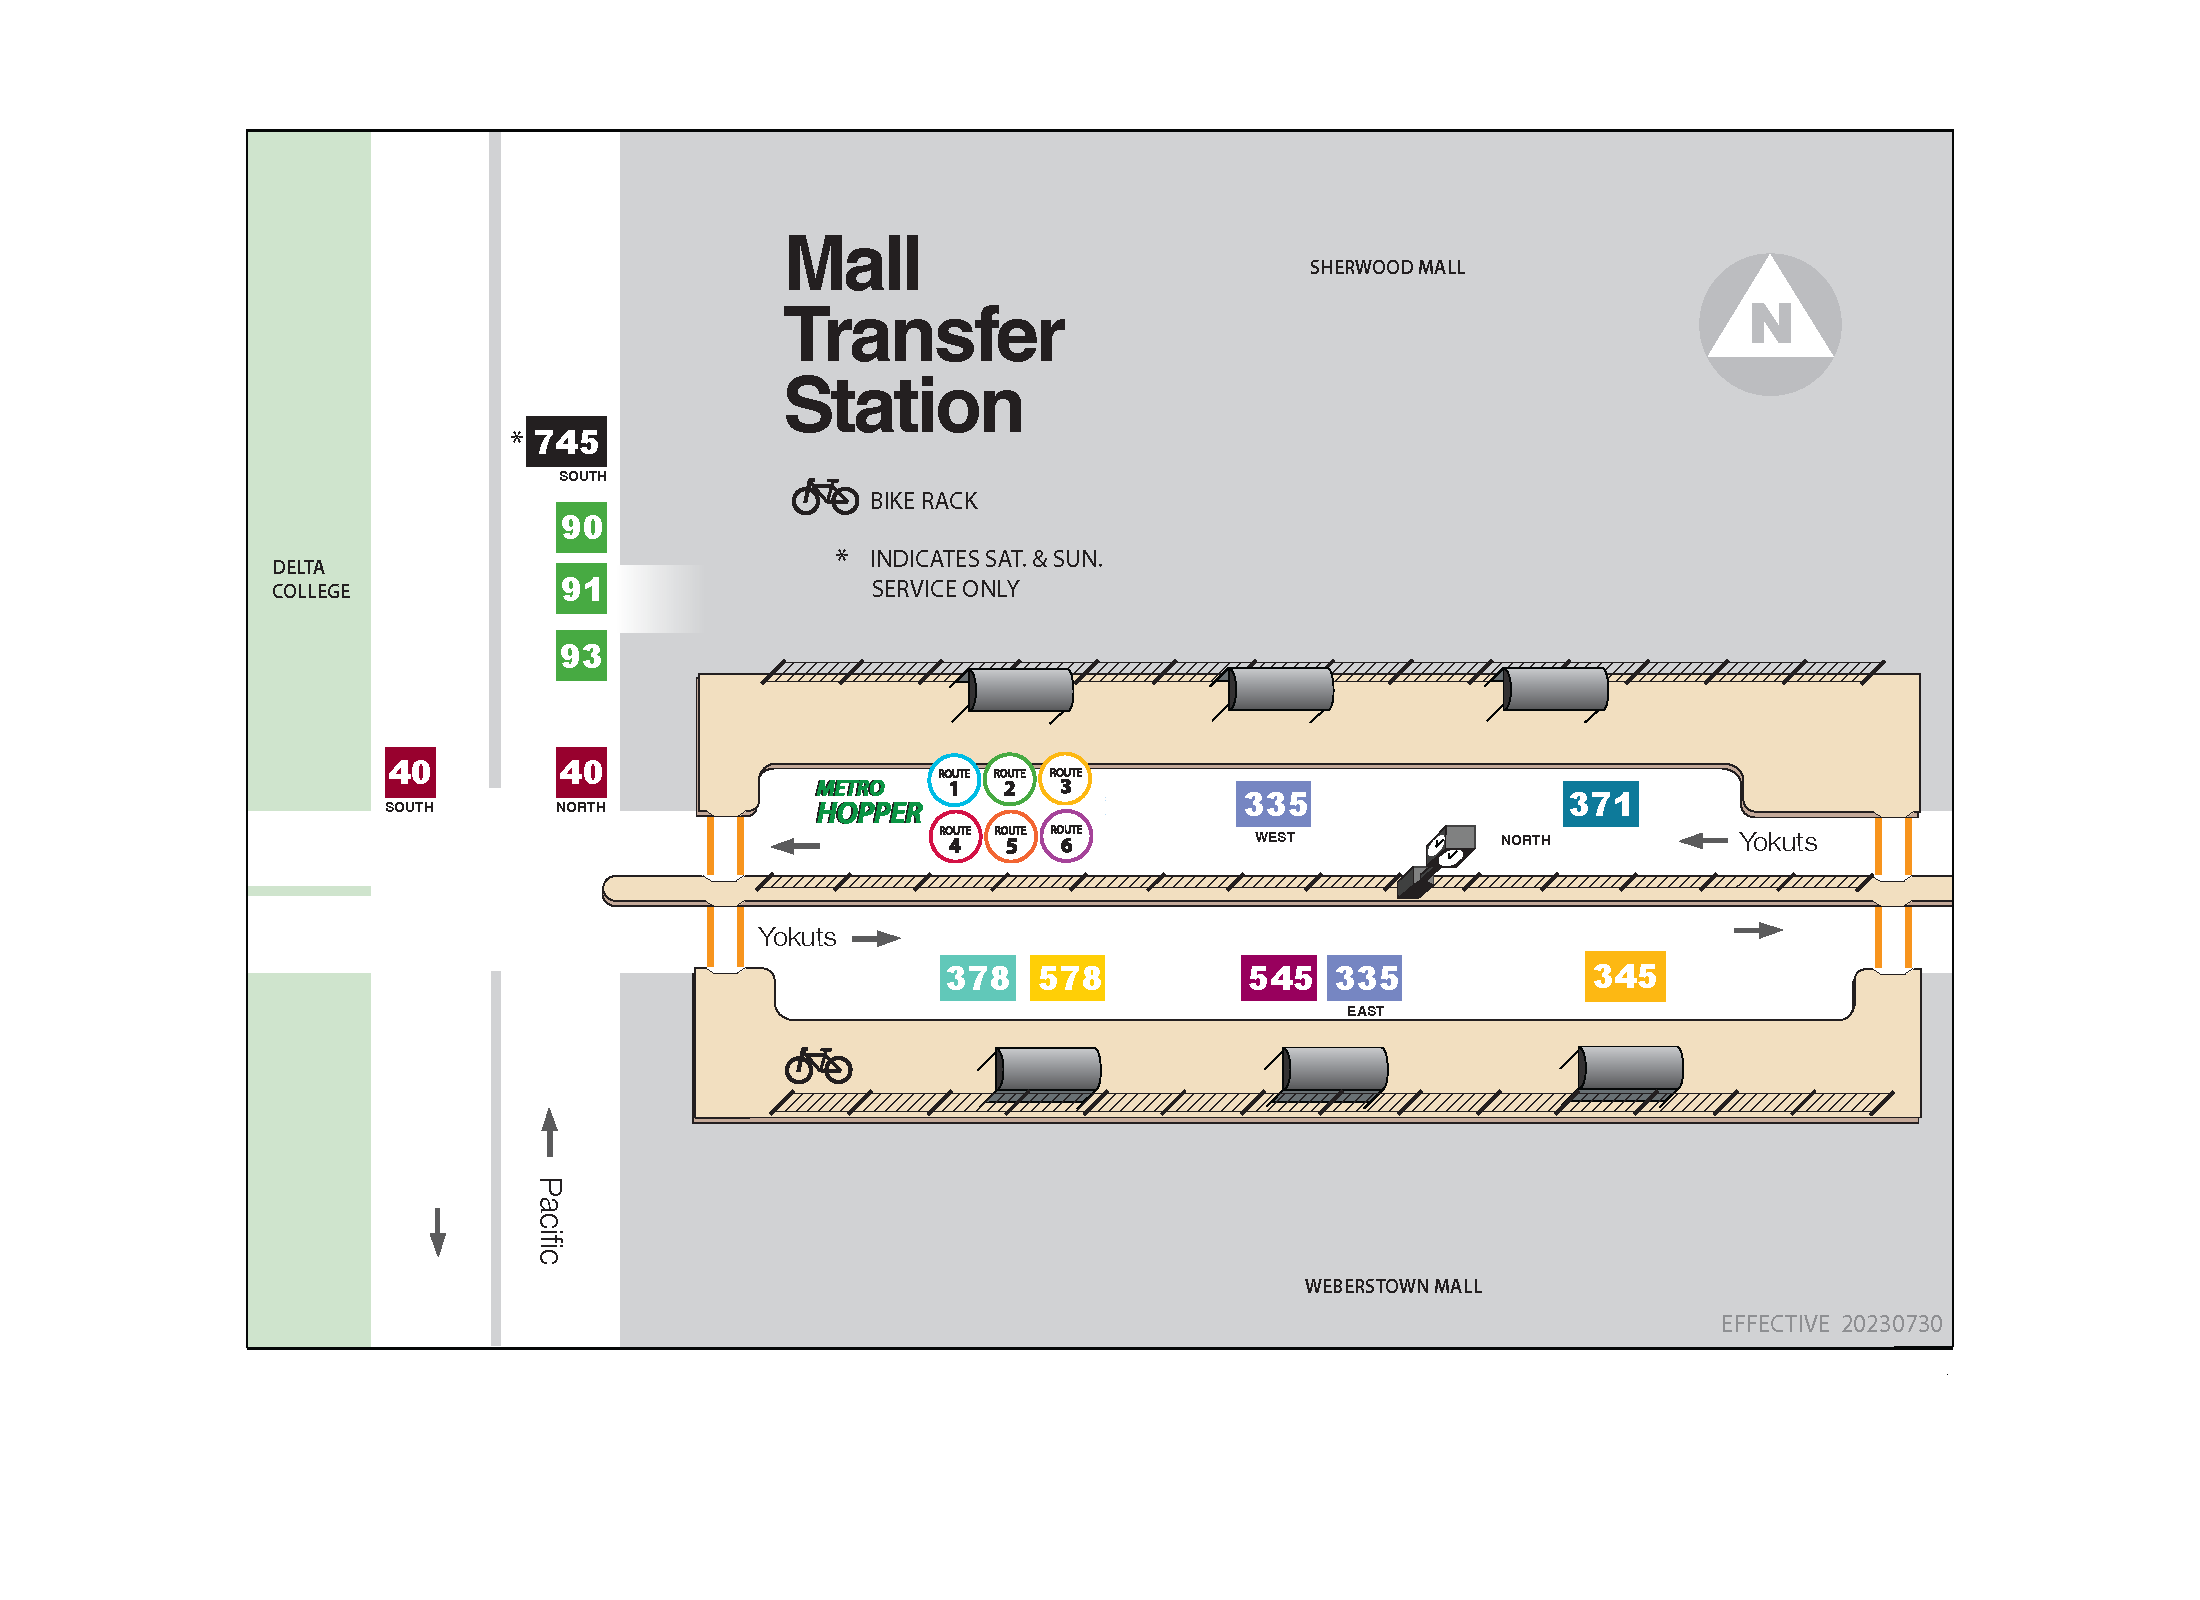 Mall Transfer Station Platform Map